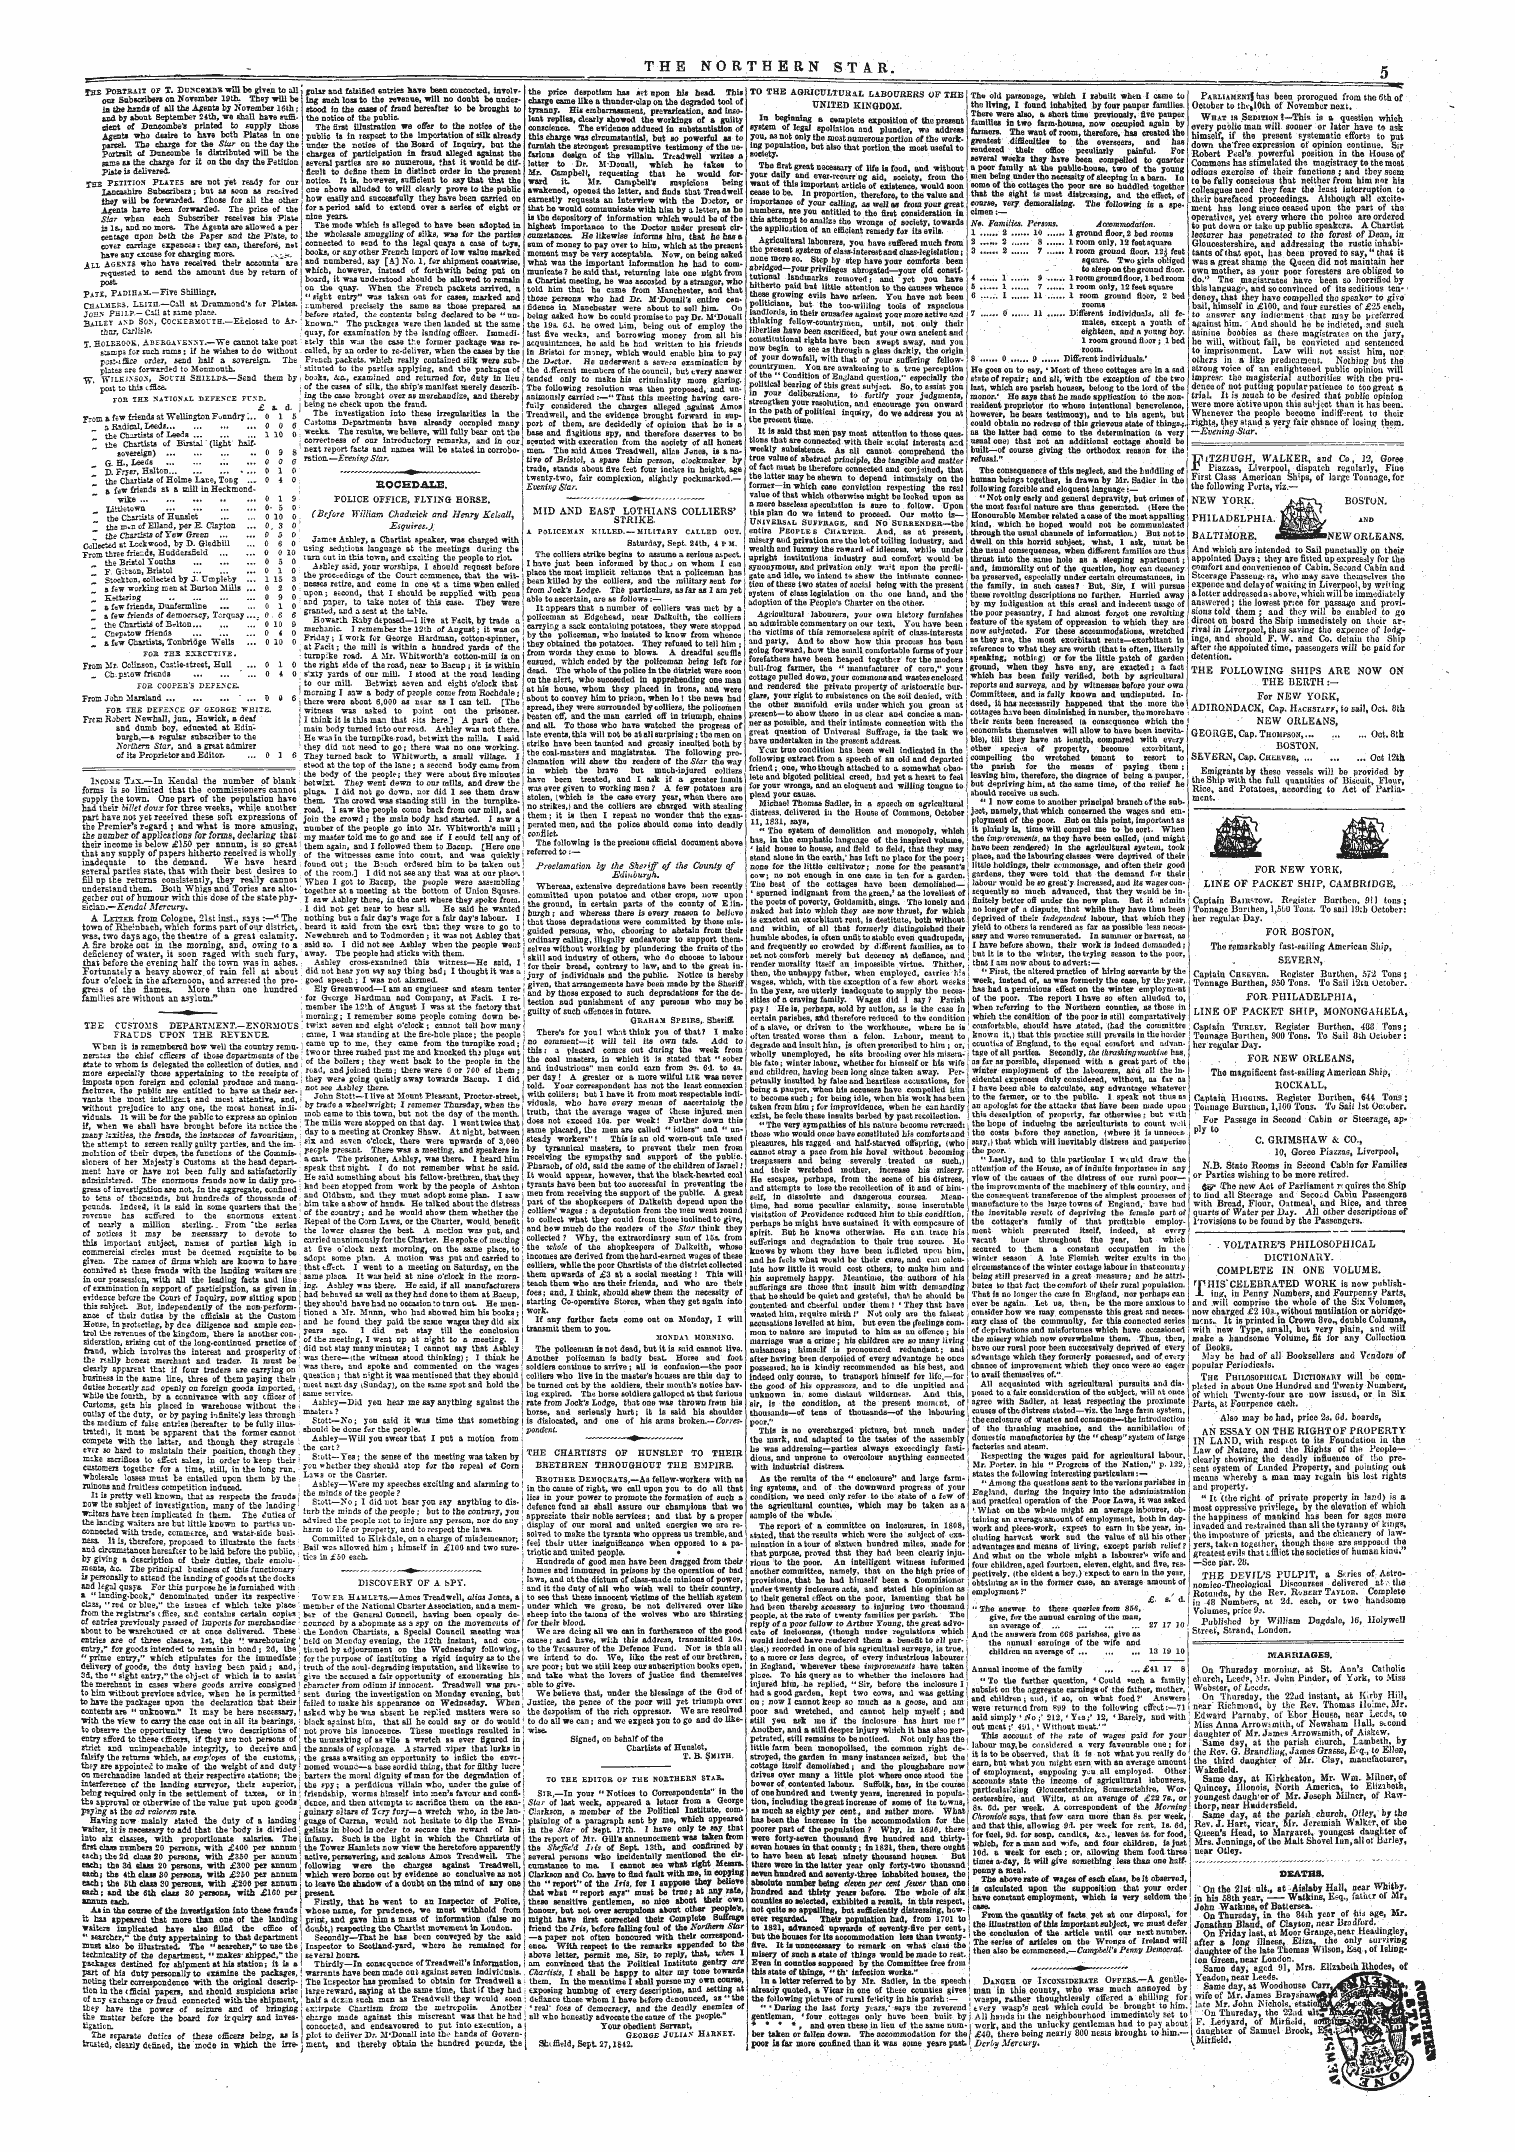 Northern Star (1837-1852): jS F Y, 5th edition - Iwariuaces .